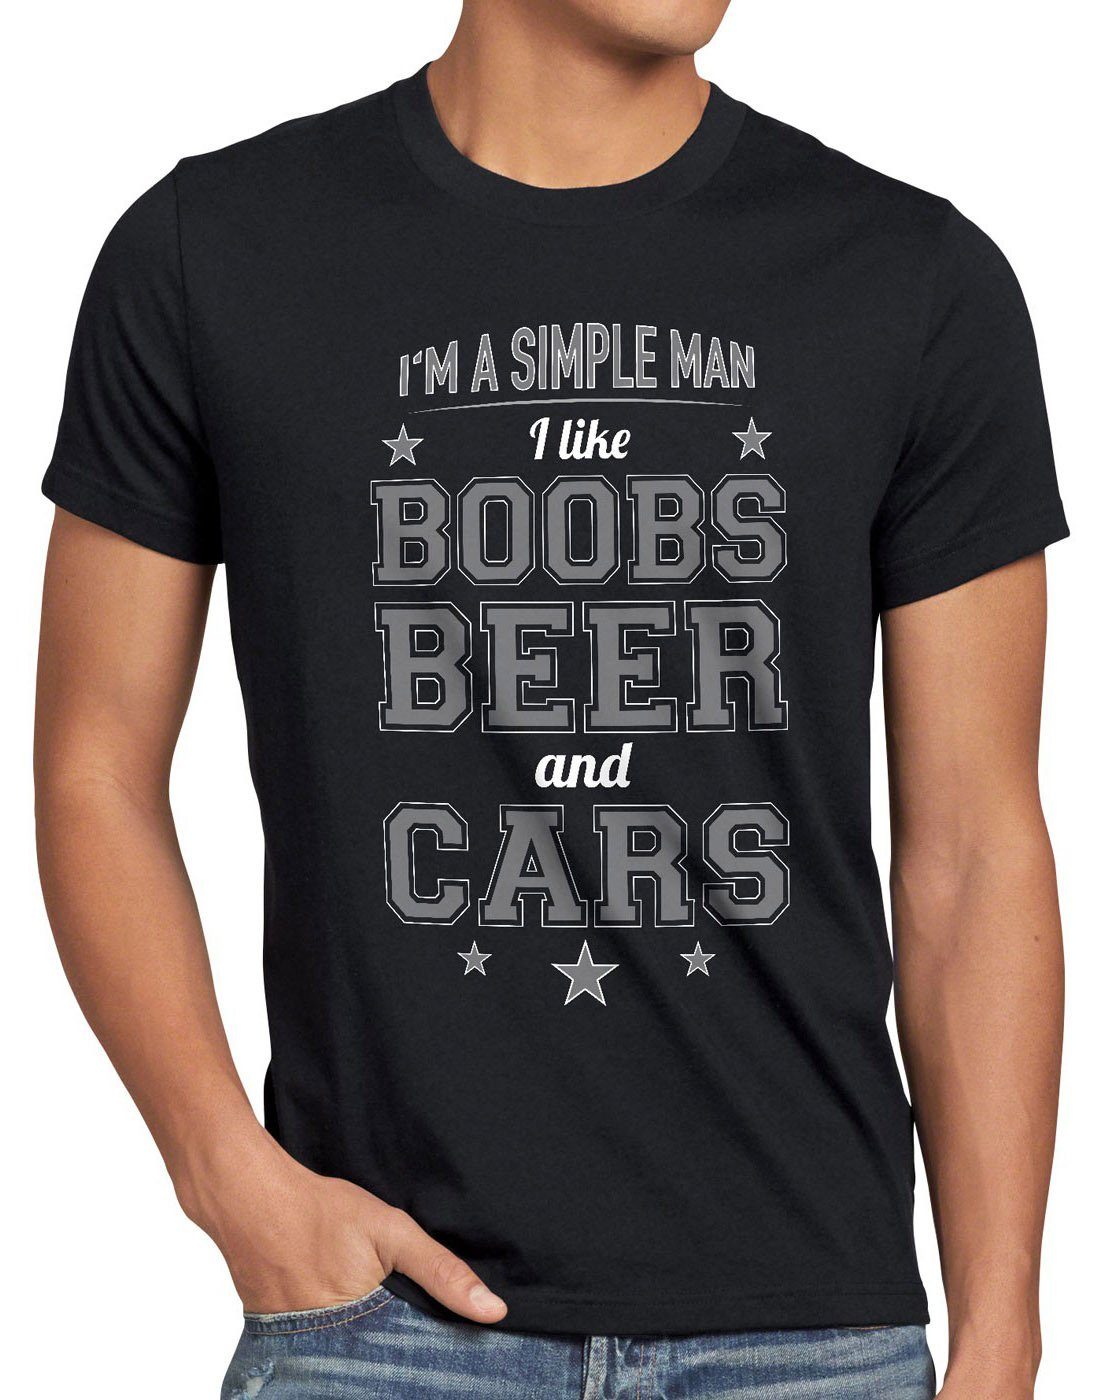 style3 Print-Shirt Herren T-Shirt Simple Man boobs beer car auto bier titten funshirt tuning spruch schwarz